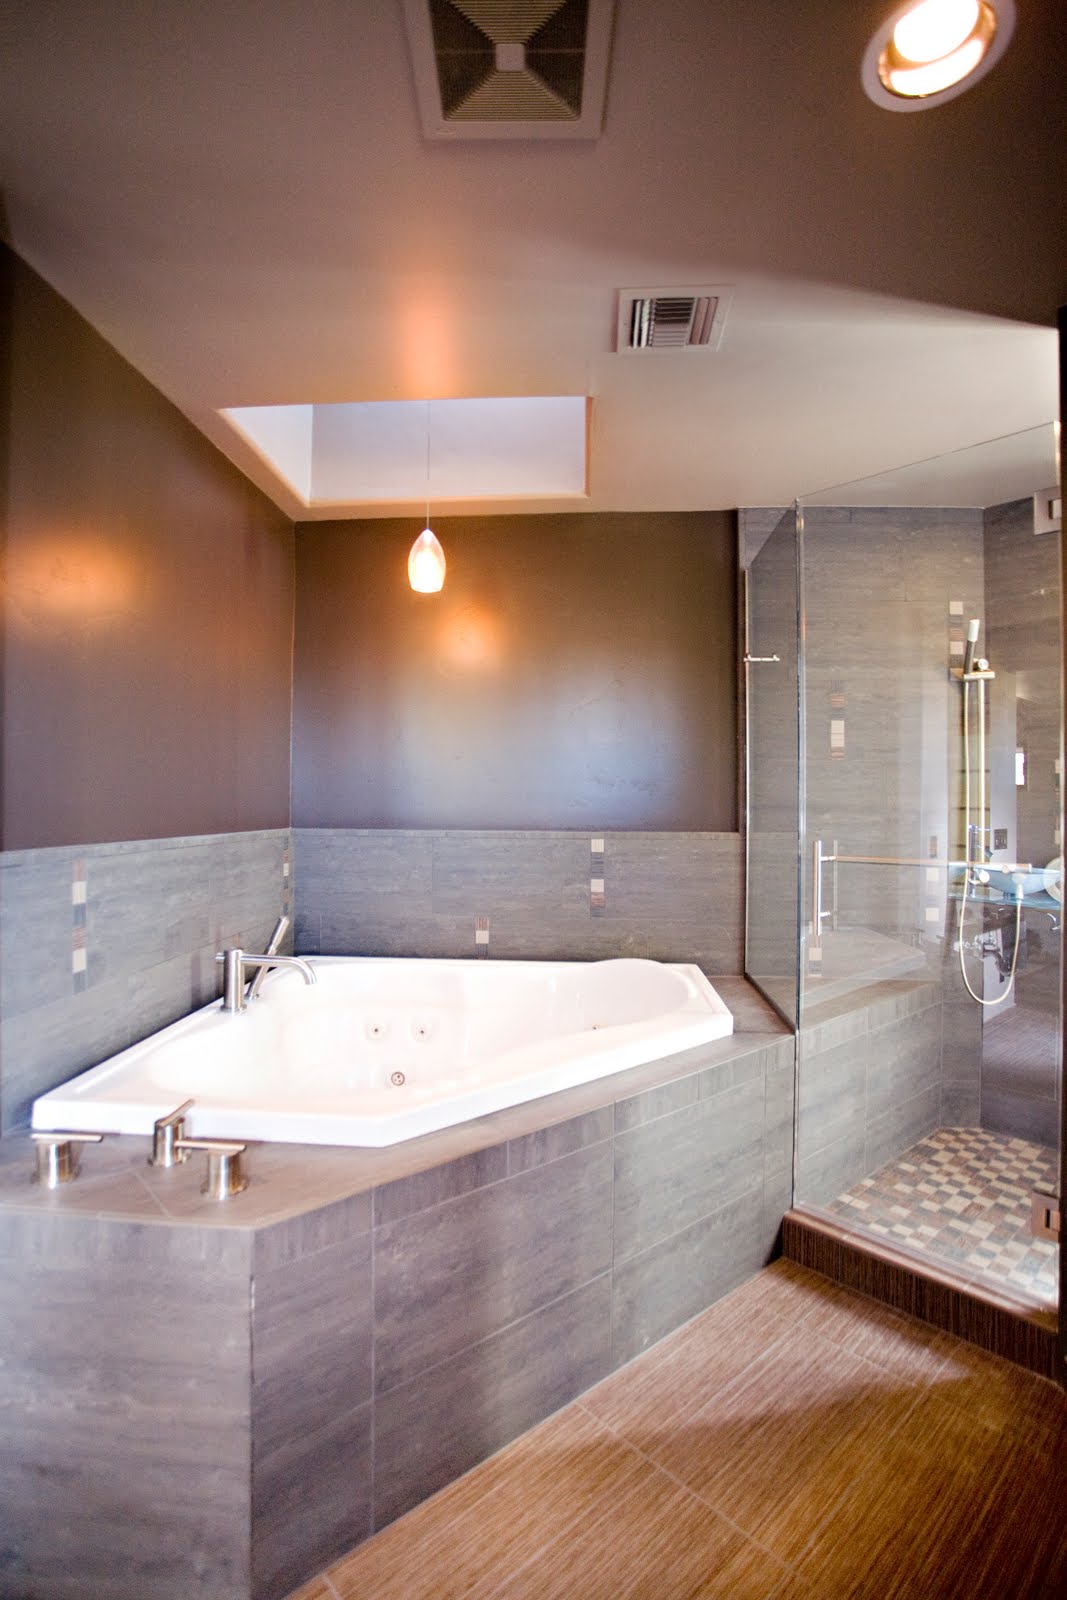 CC Interior Designs: No Slate in Master Bathroom Redo